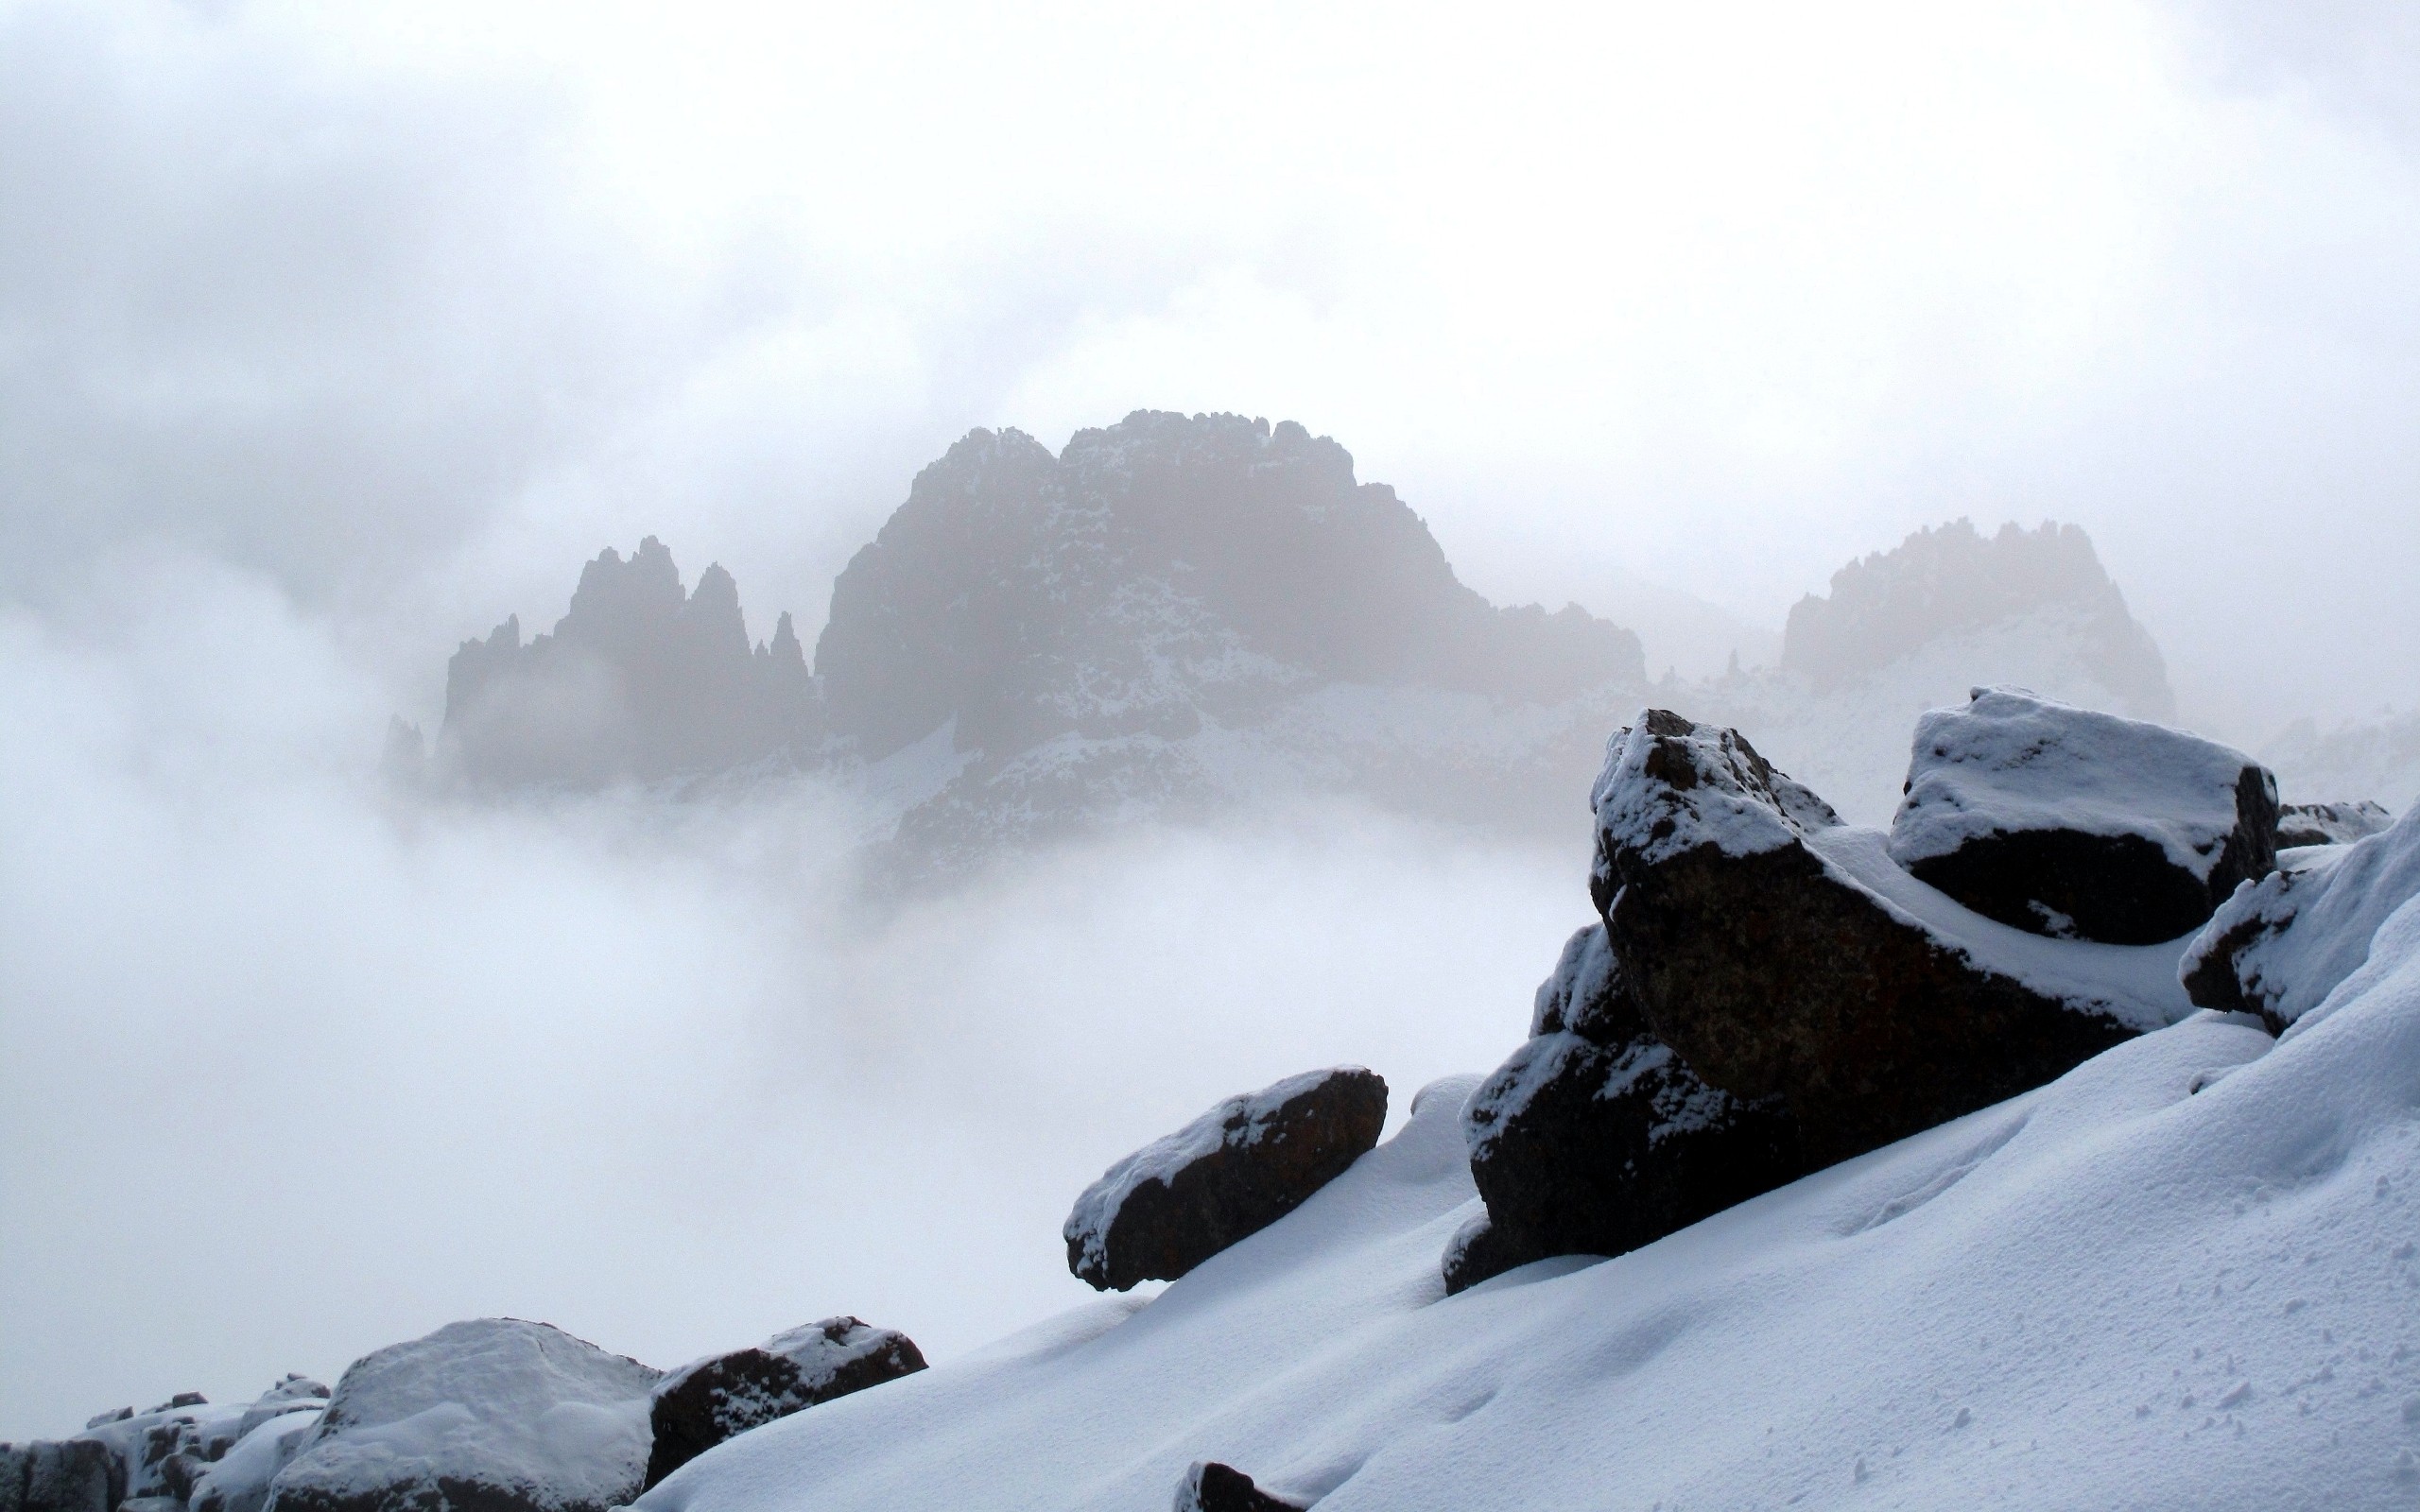 General 2560x1600 landscape nature snow rocks mountains mist cold outdoors